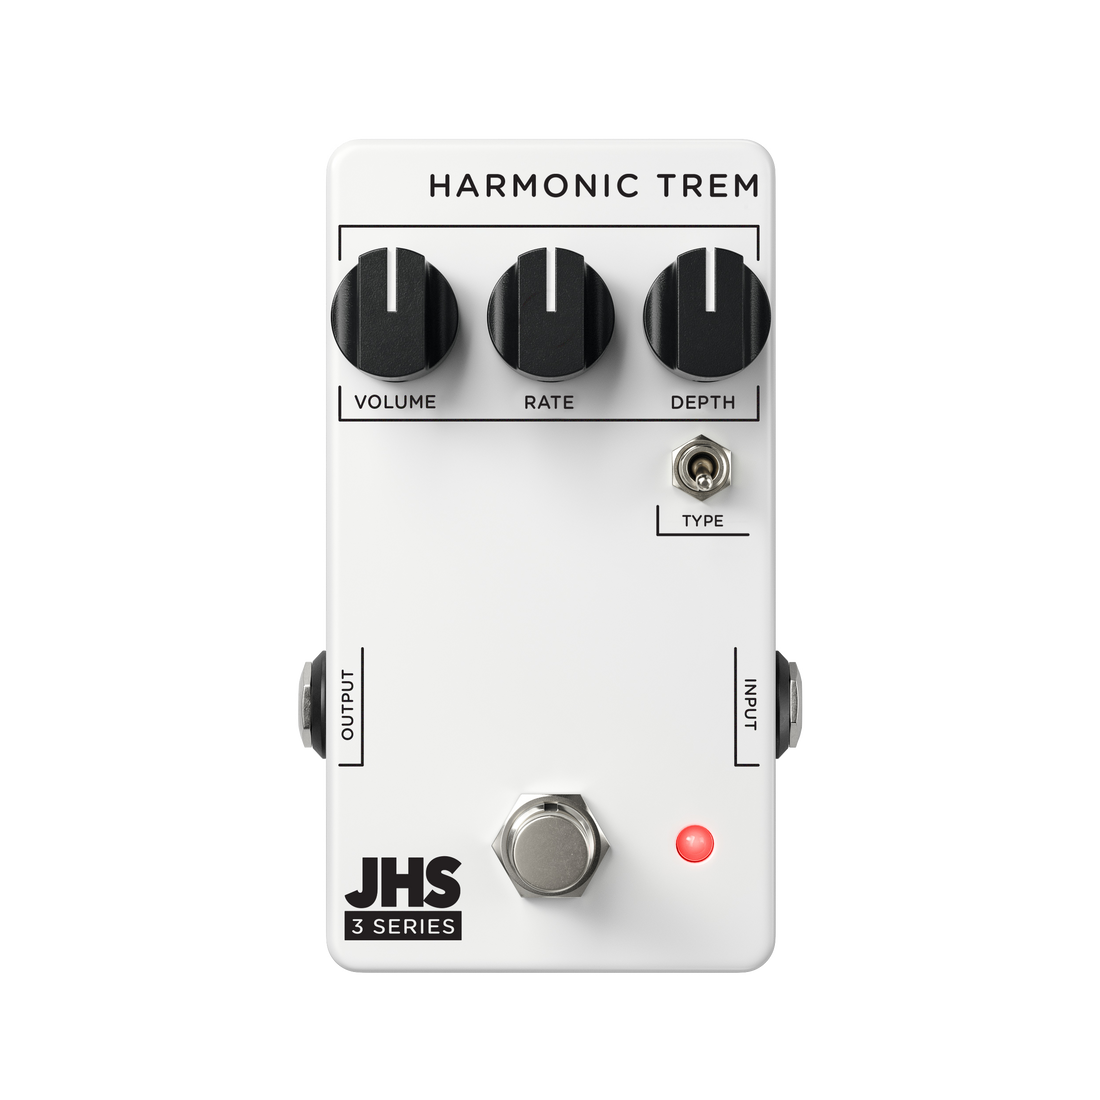 JHS 3 series harmonic trem